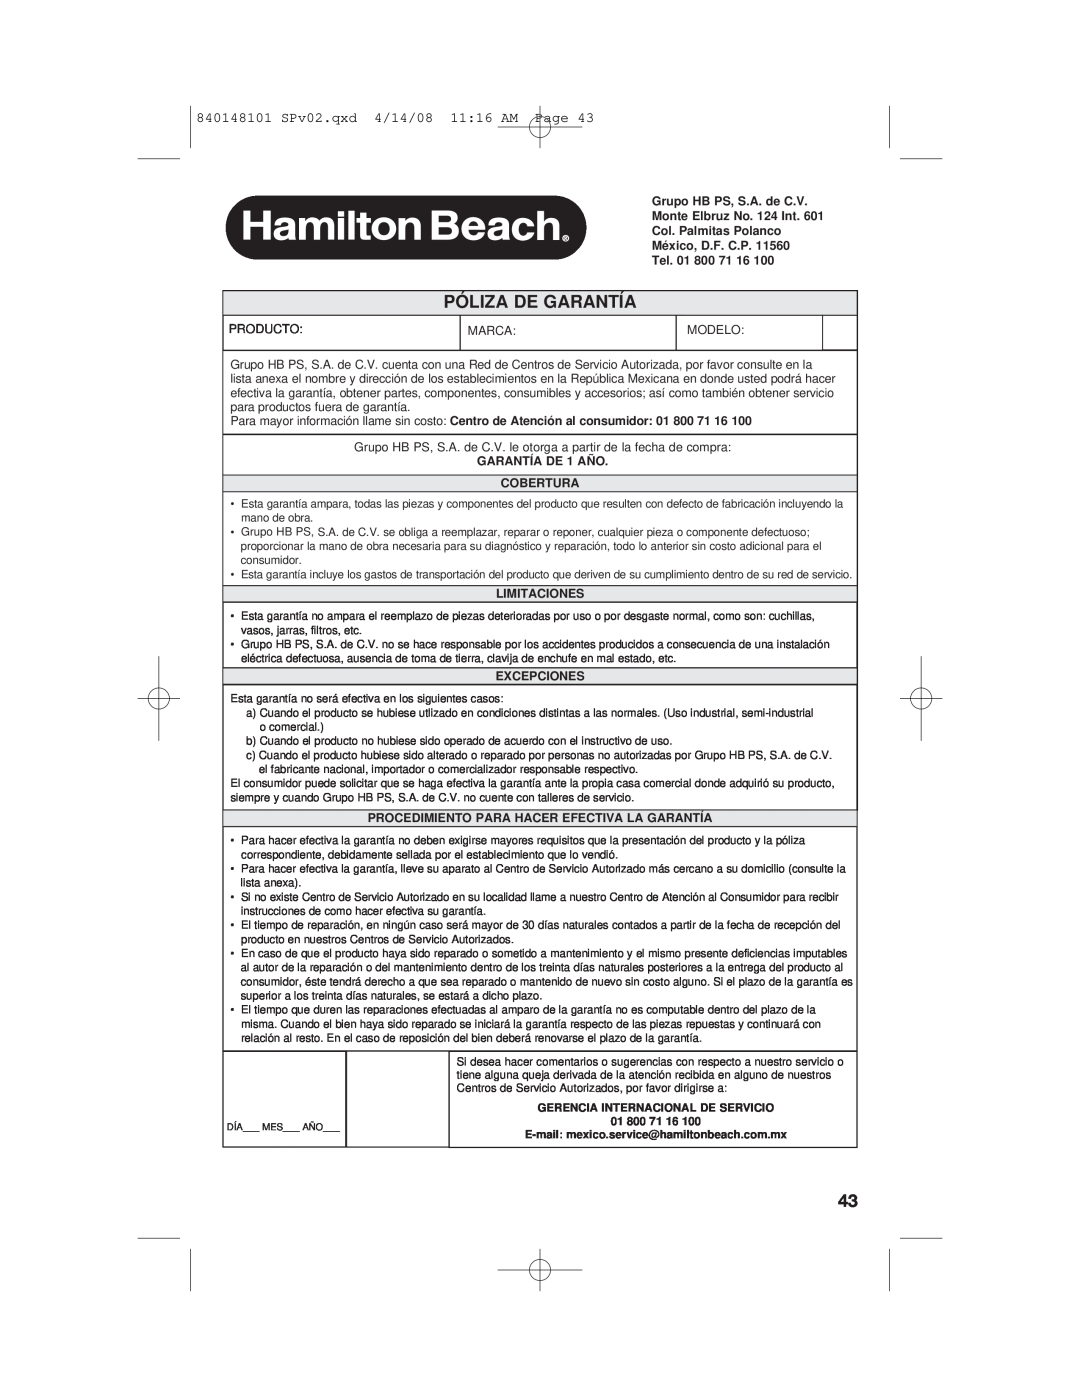 Hamilton Beach manual Póliza De Garantía, 840148101 SPv02.qxd 4/14/08 11 16 AM Page 